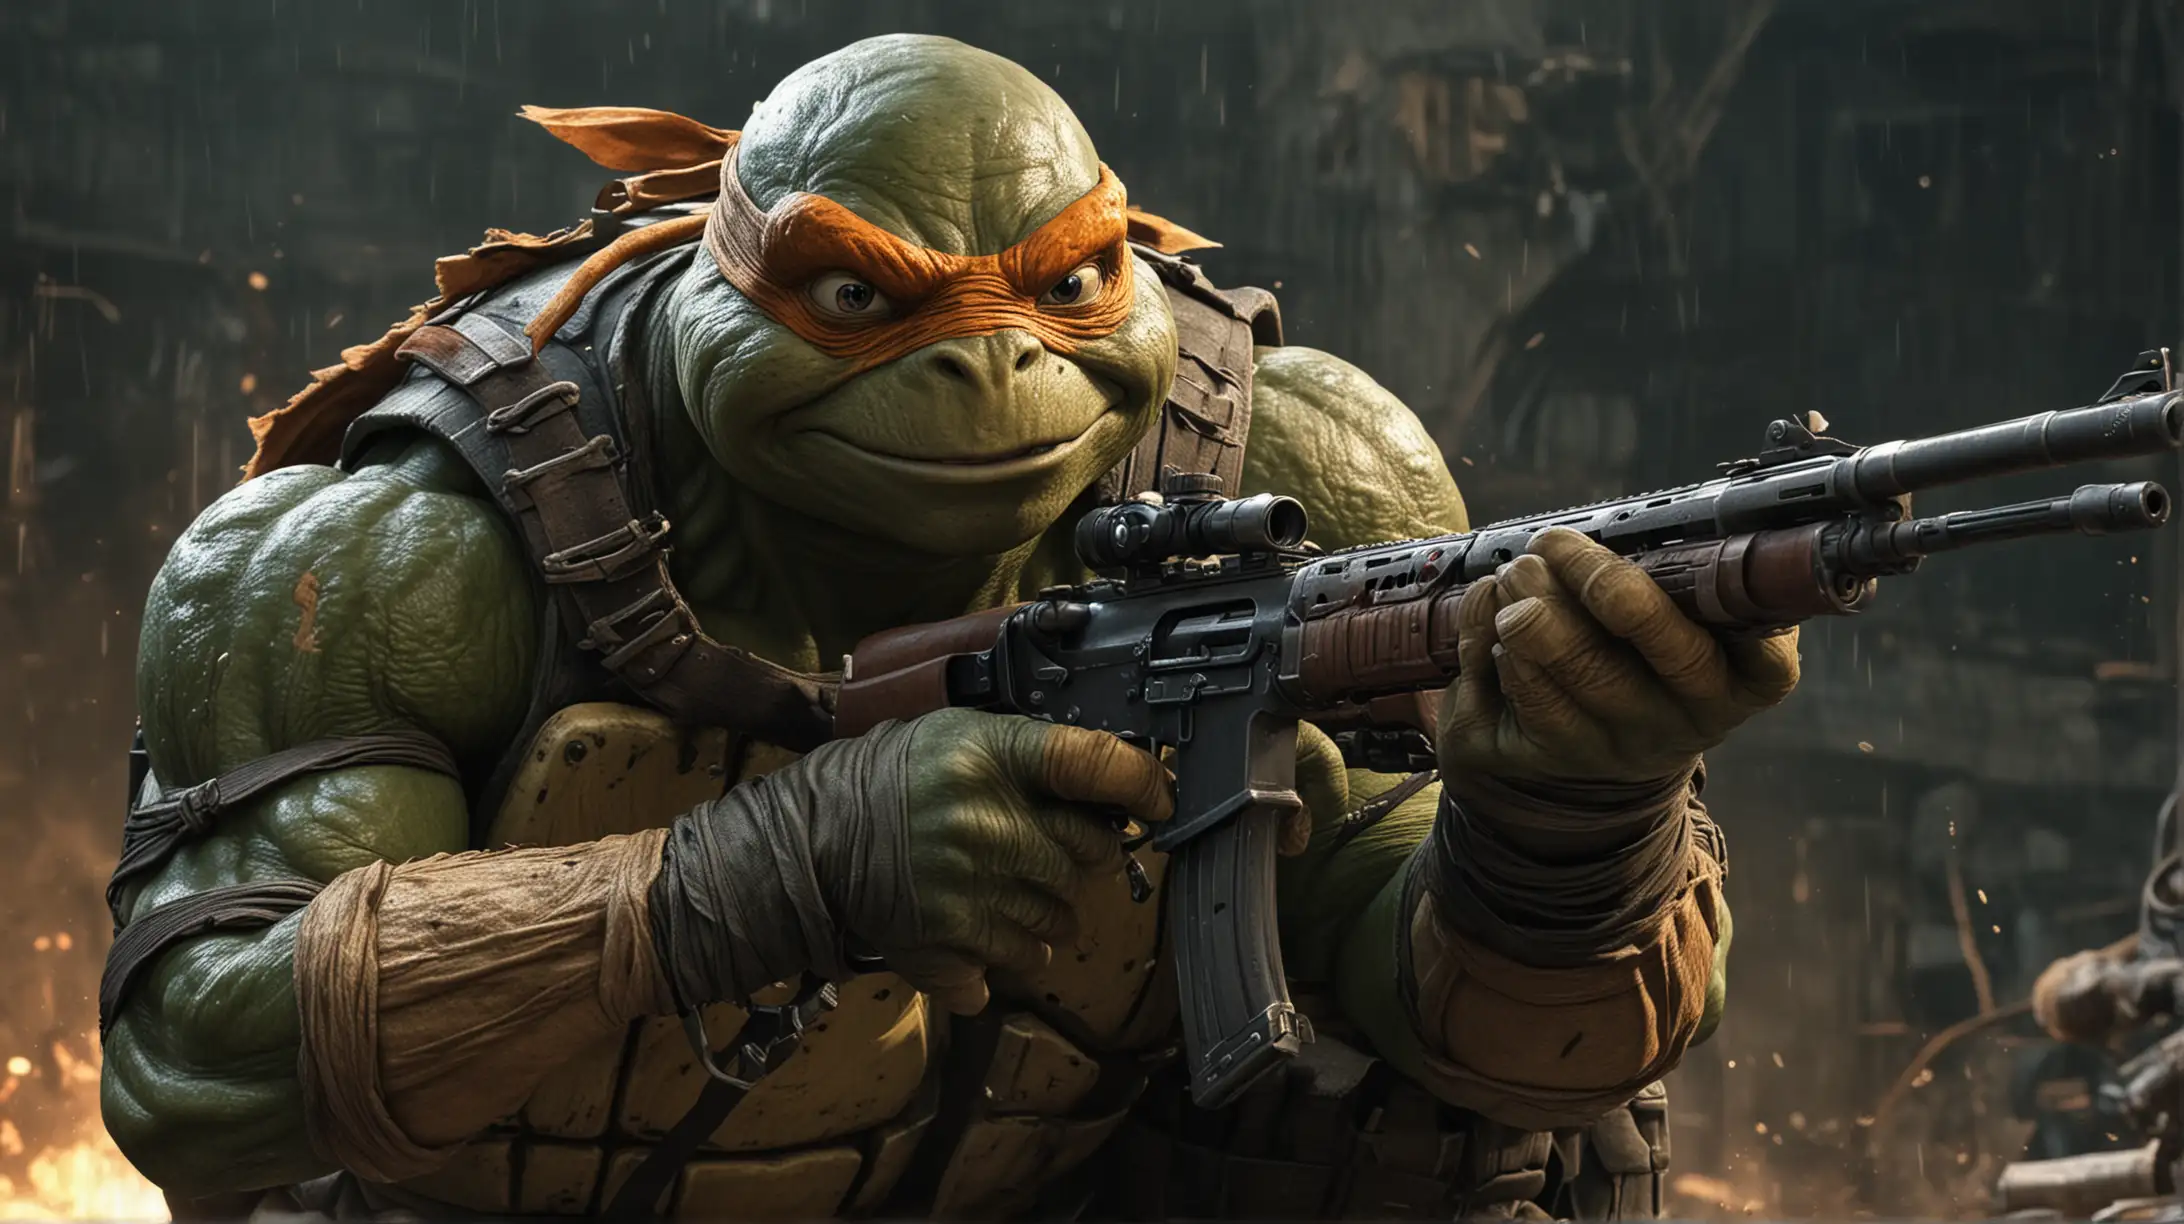 Ninja Turtle Michaelangelo in Gritty War Scene with Rifle